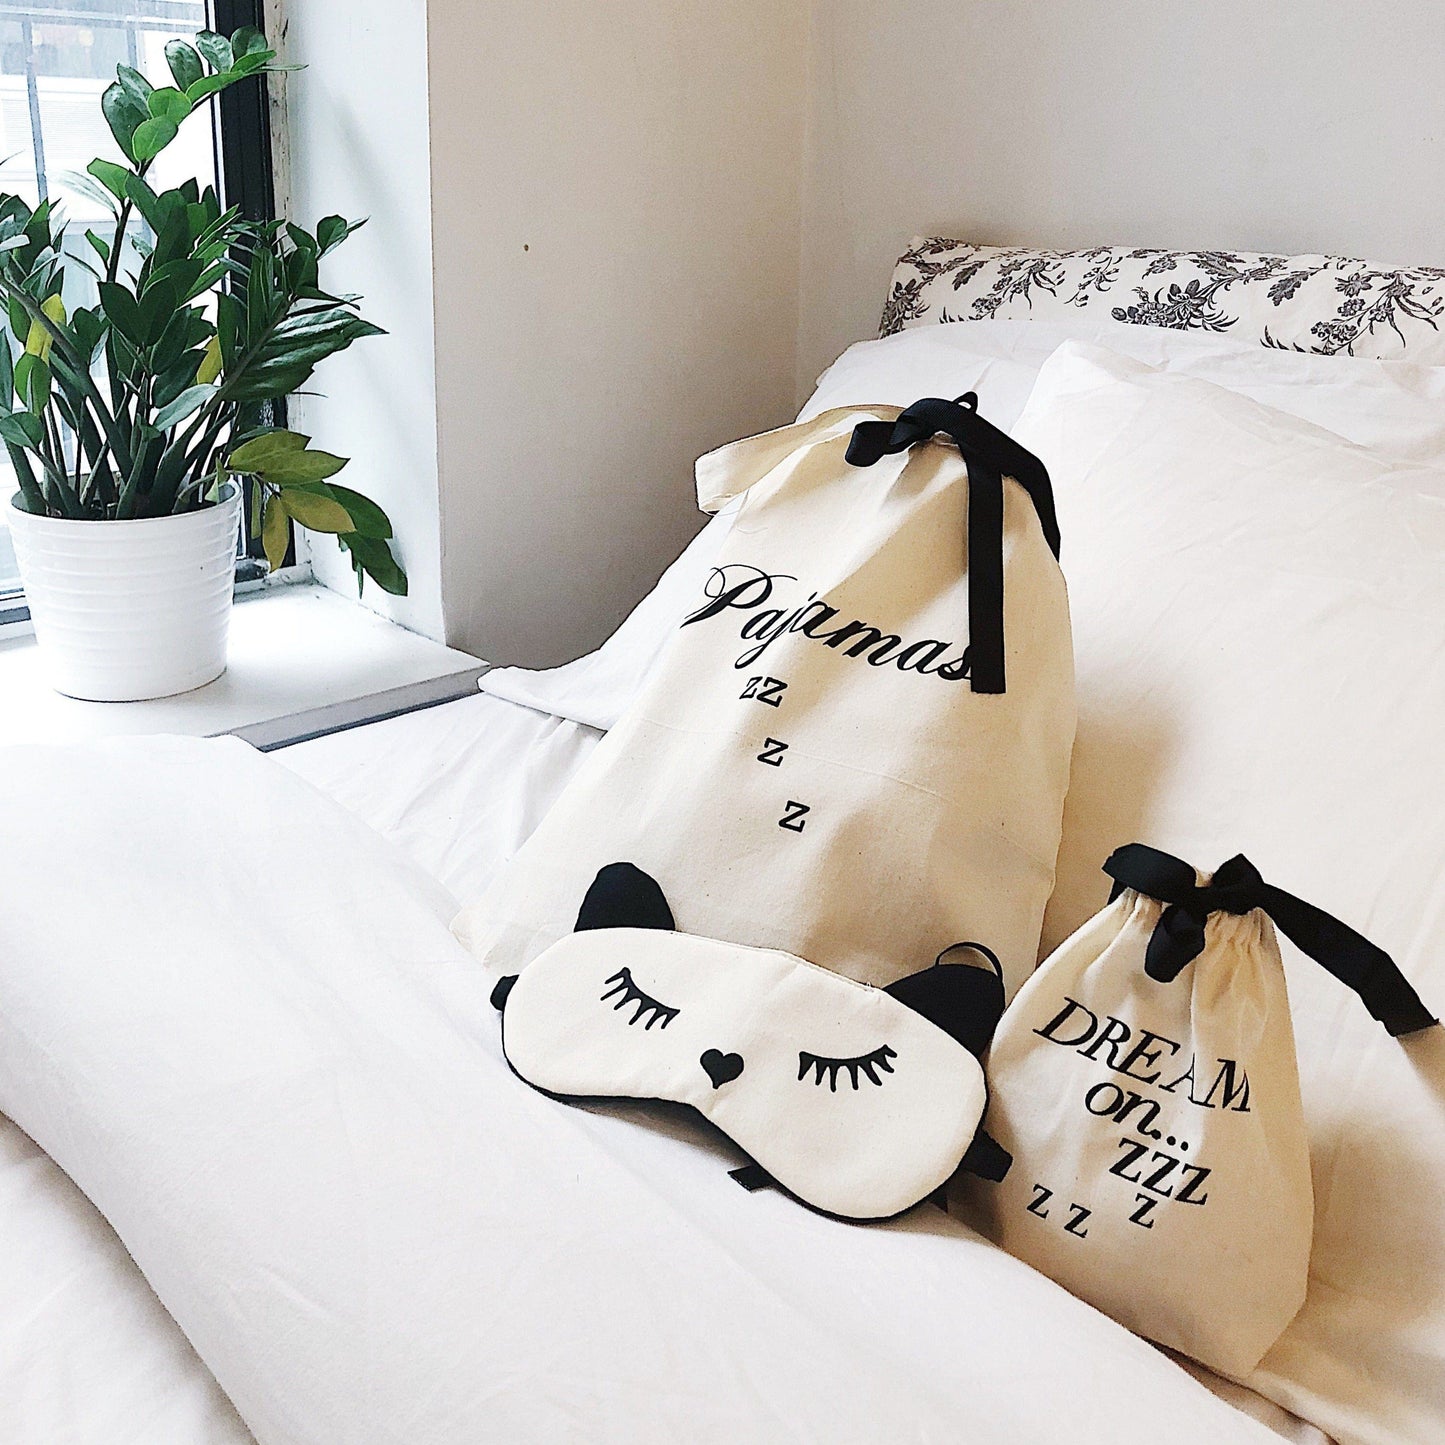 
                                      
                                        Sleeping Mask, Case, pajama zzz bag on bed with zz plant in window
                                      
                                    